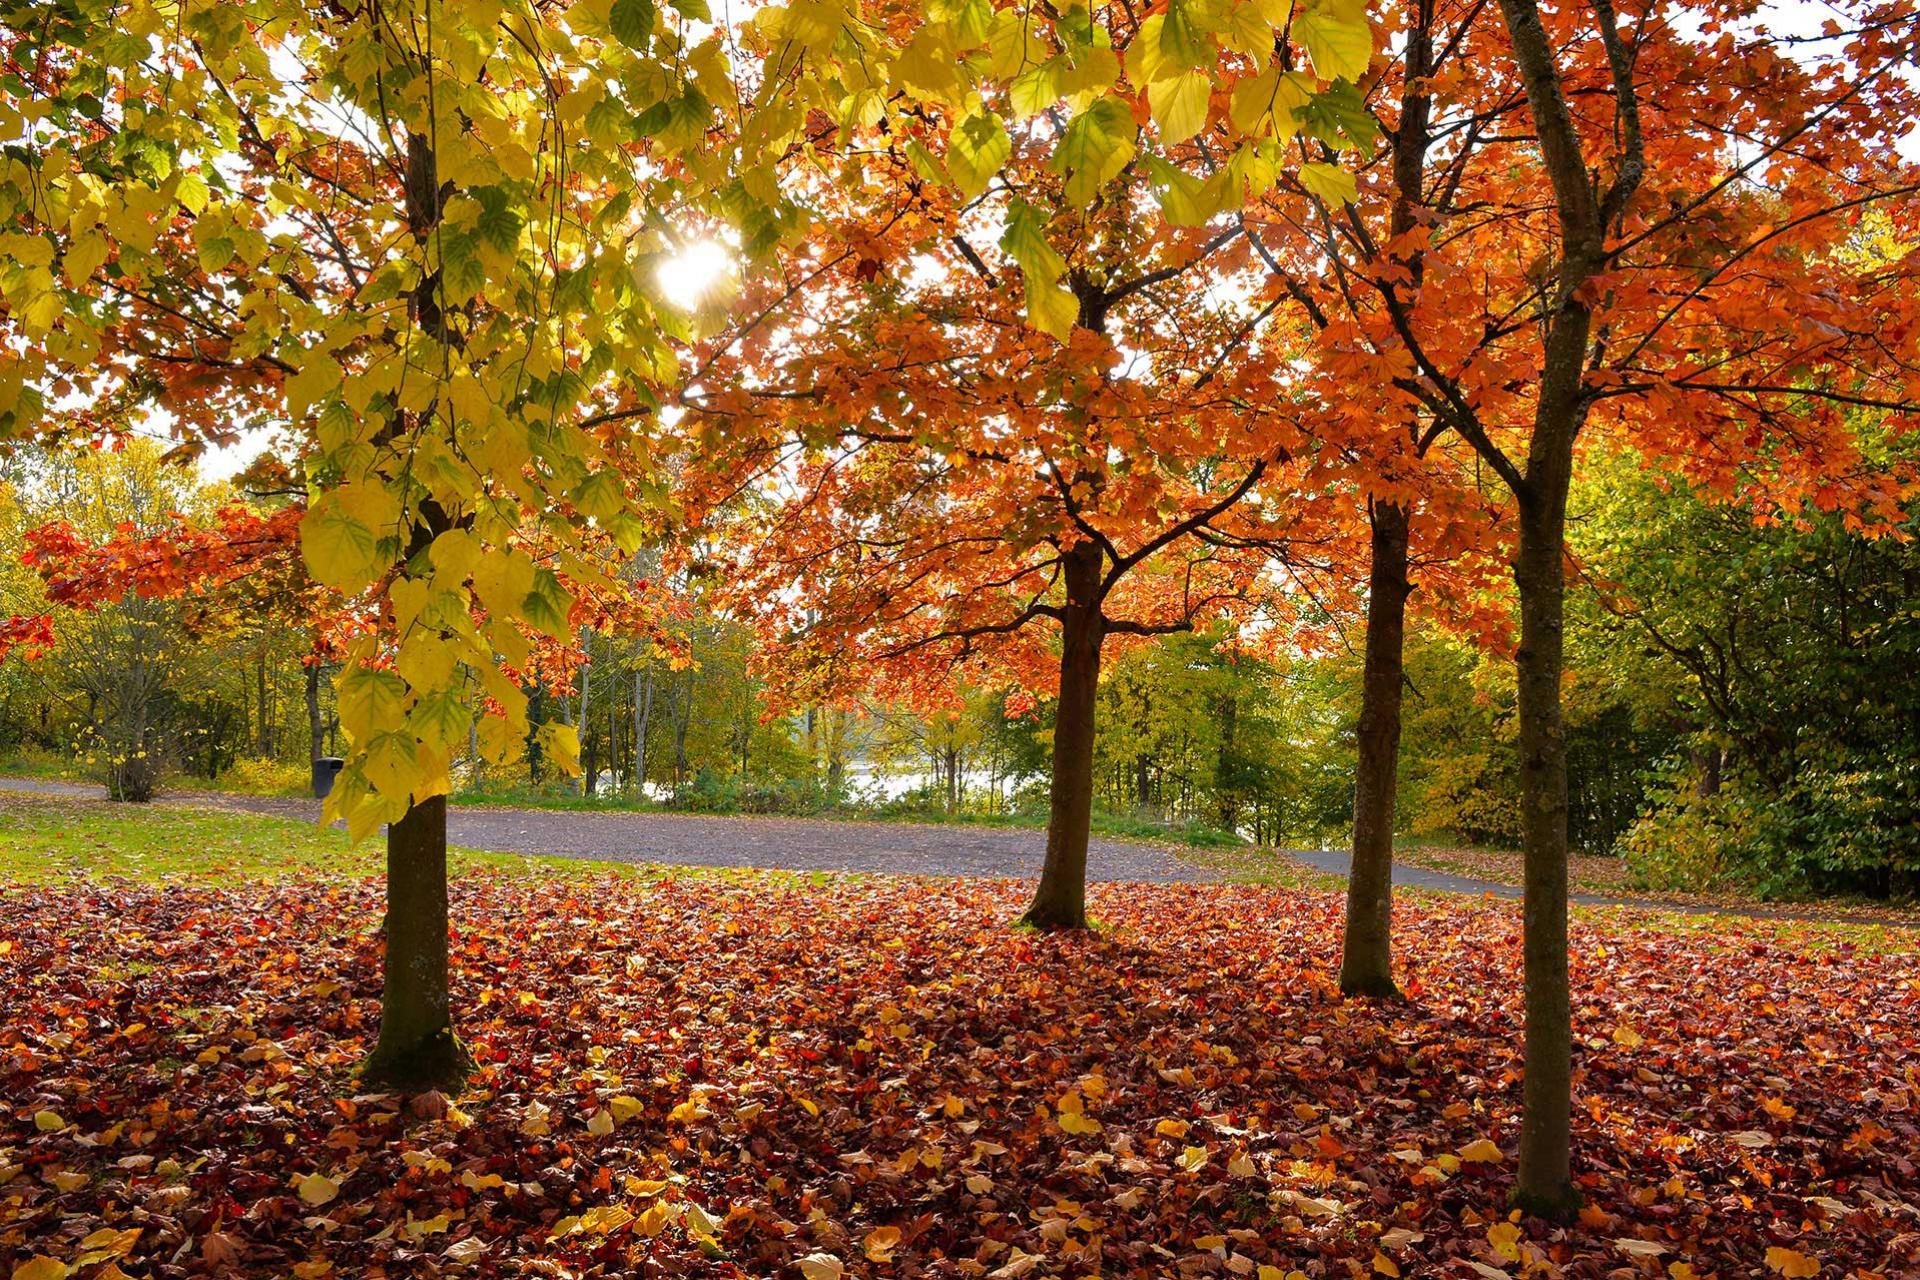 Strathclyde Park Autumn scene